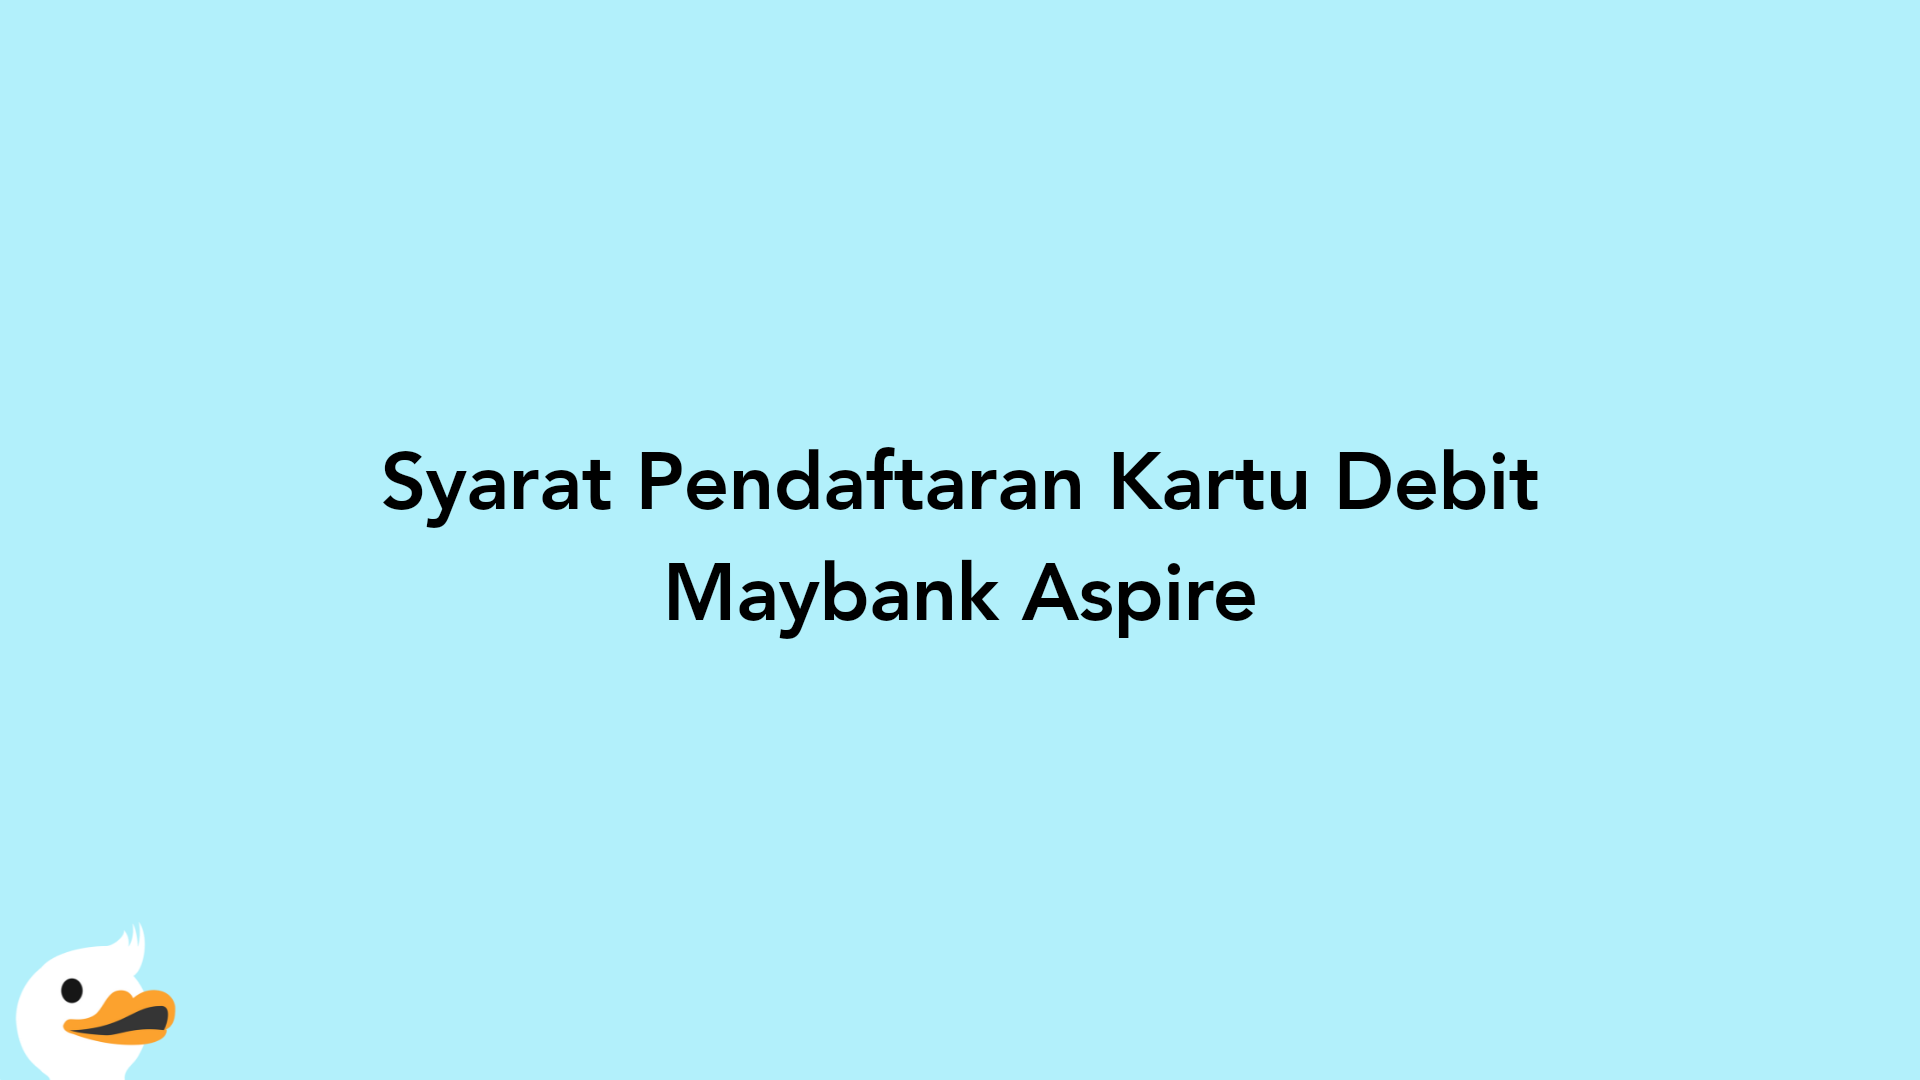 Syarat Pendaftaran Kartu Debit Maybank Aspire